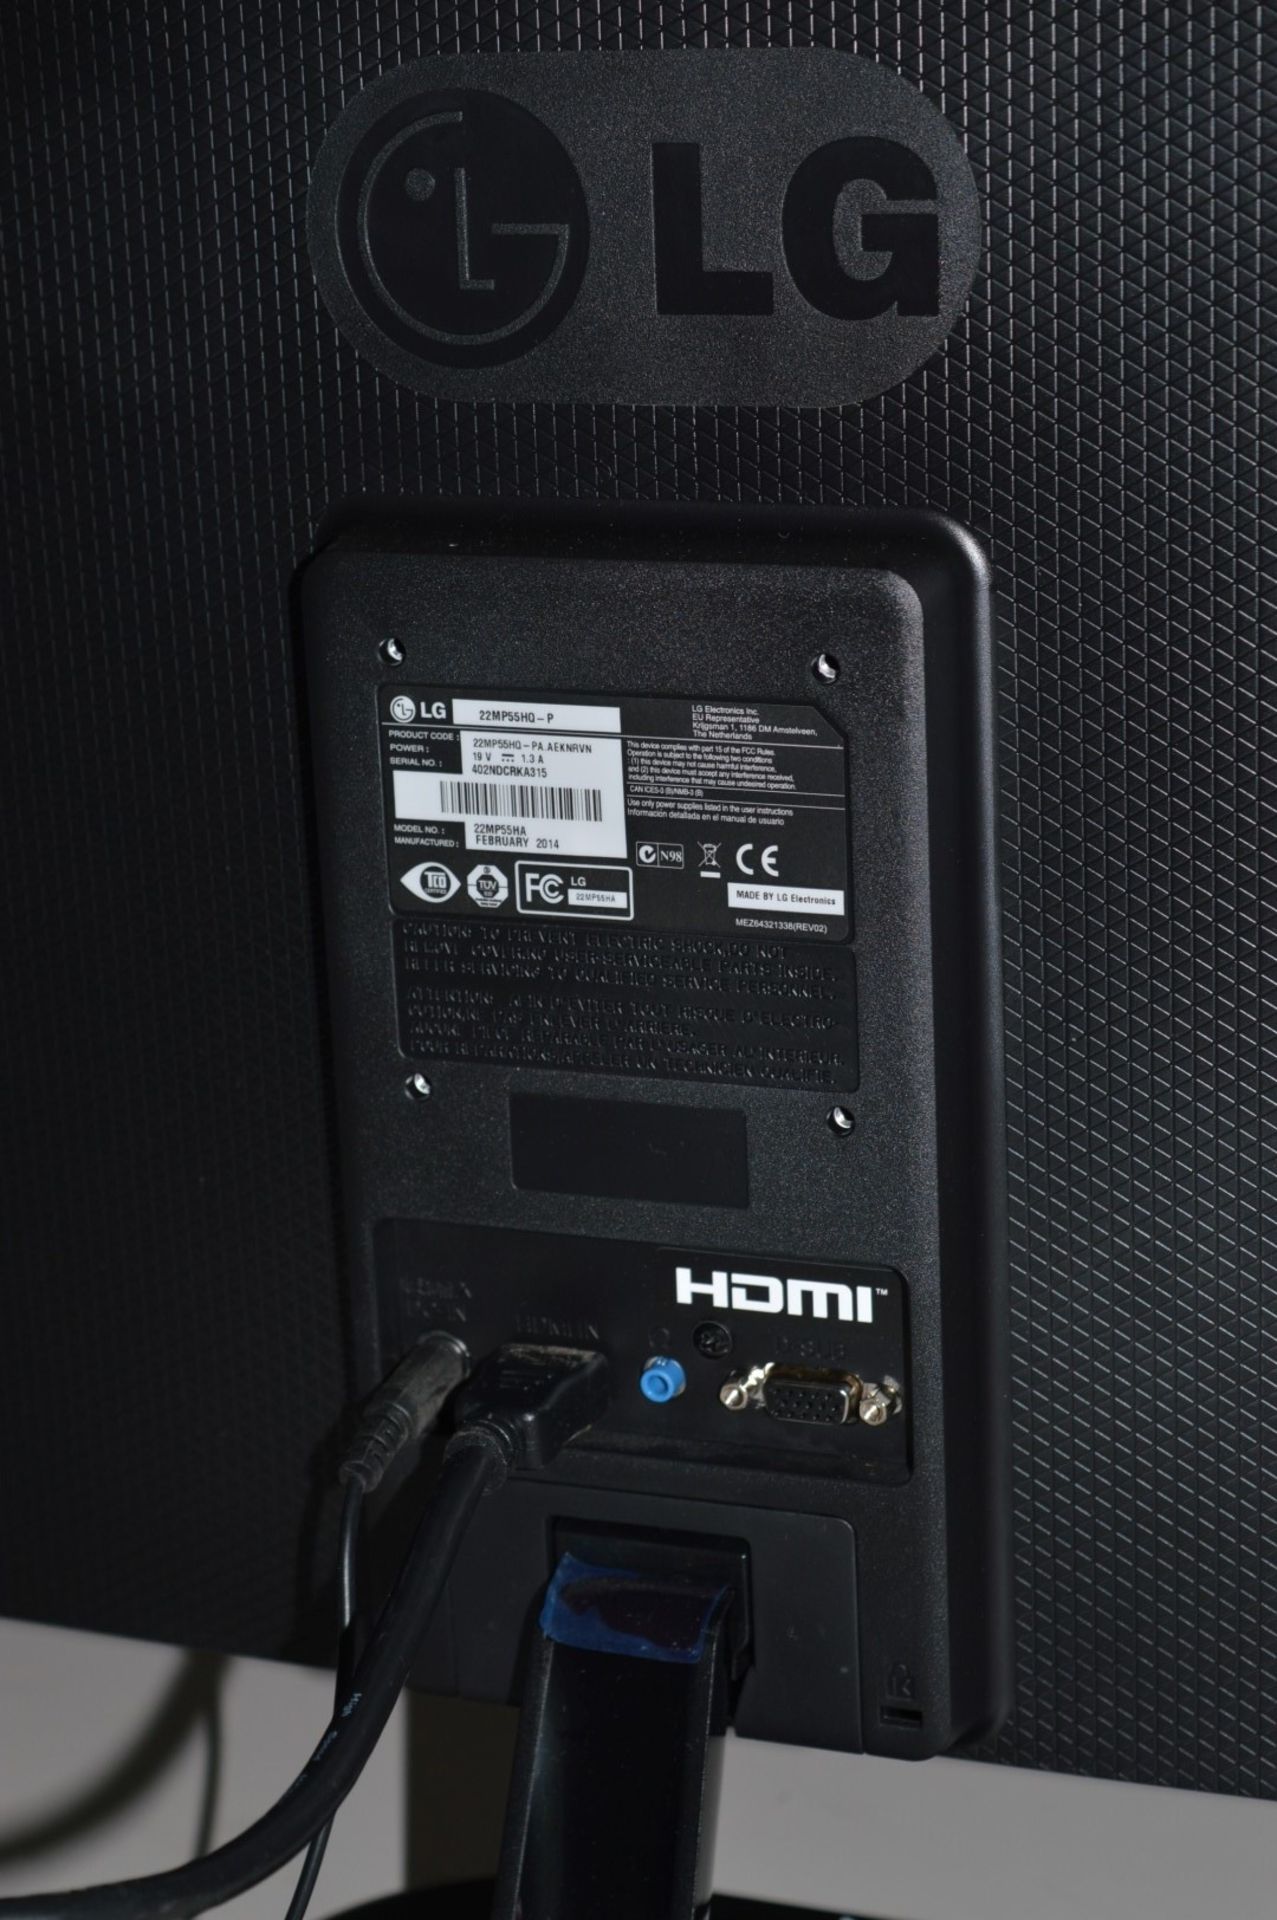 1 x LG 22" Full HD LED Monitor - Model 22MP55HQ-P - Resolution 1920 x 1080 - 5ms Response Time - - Image 4 of 4